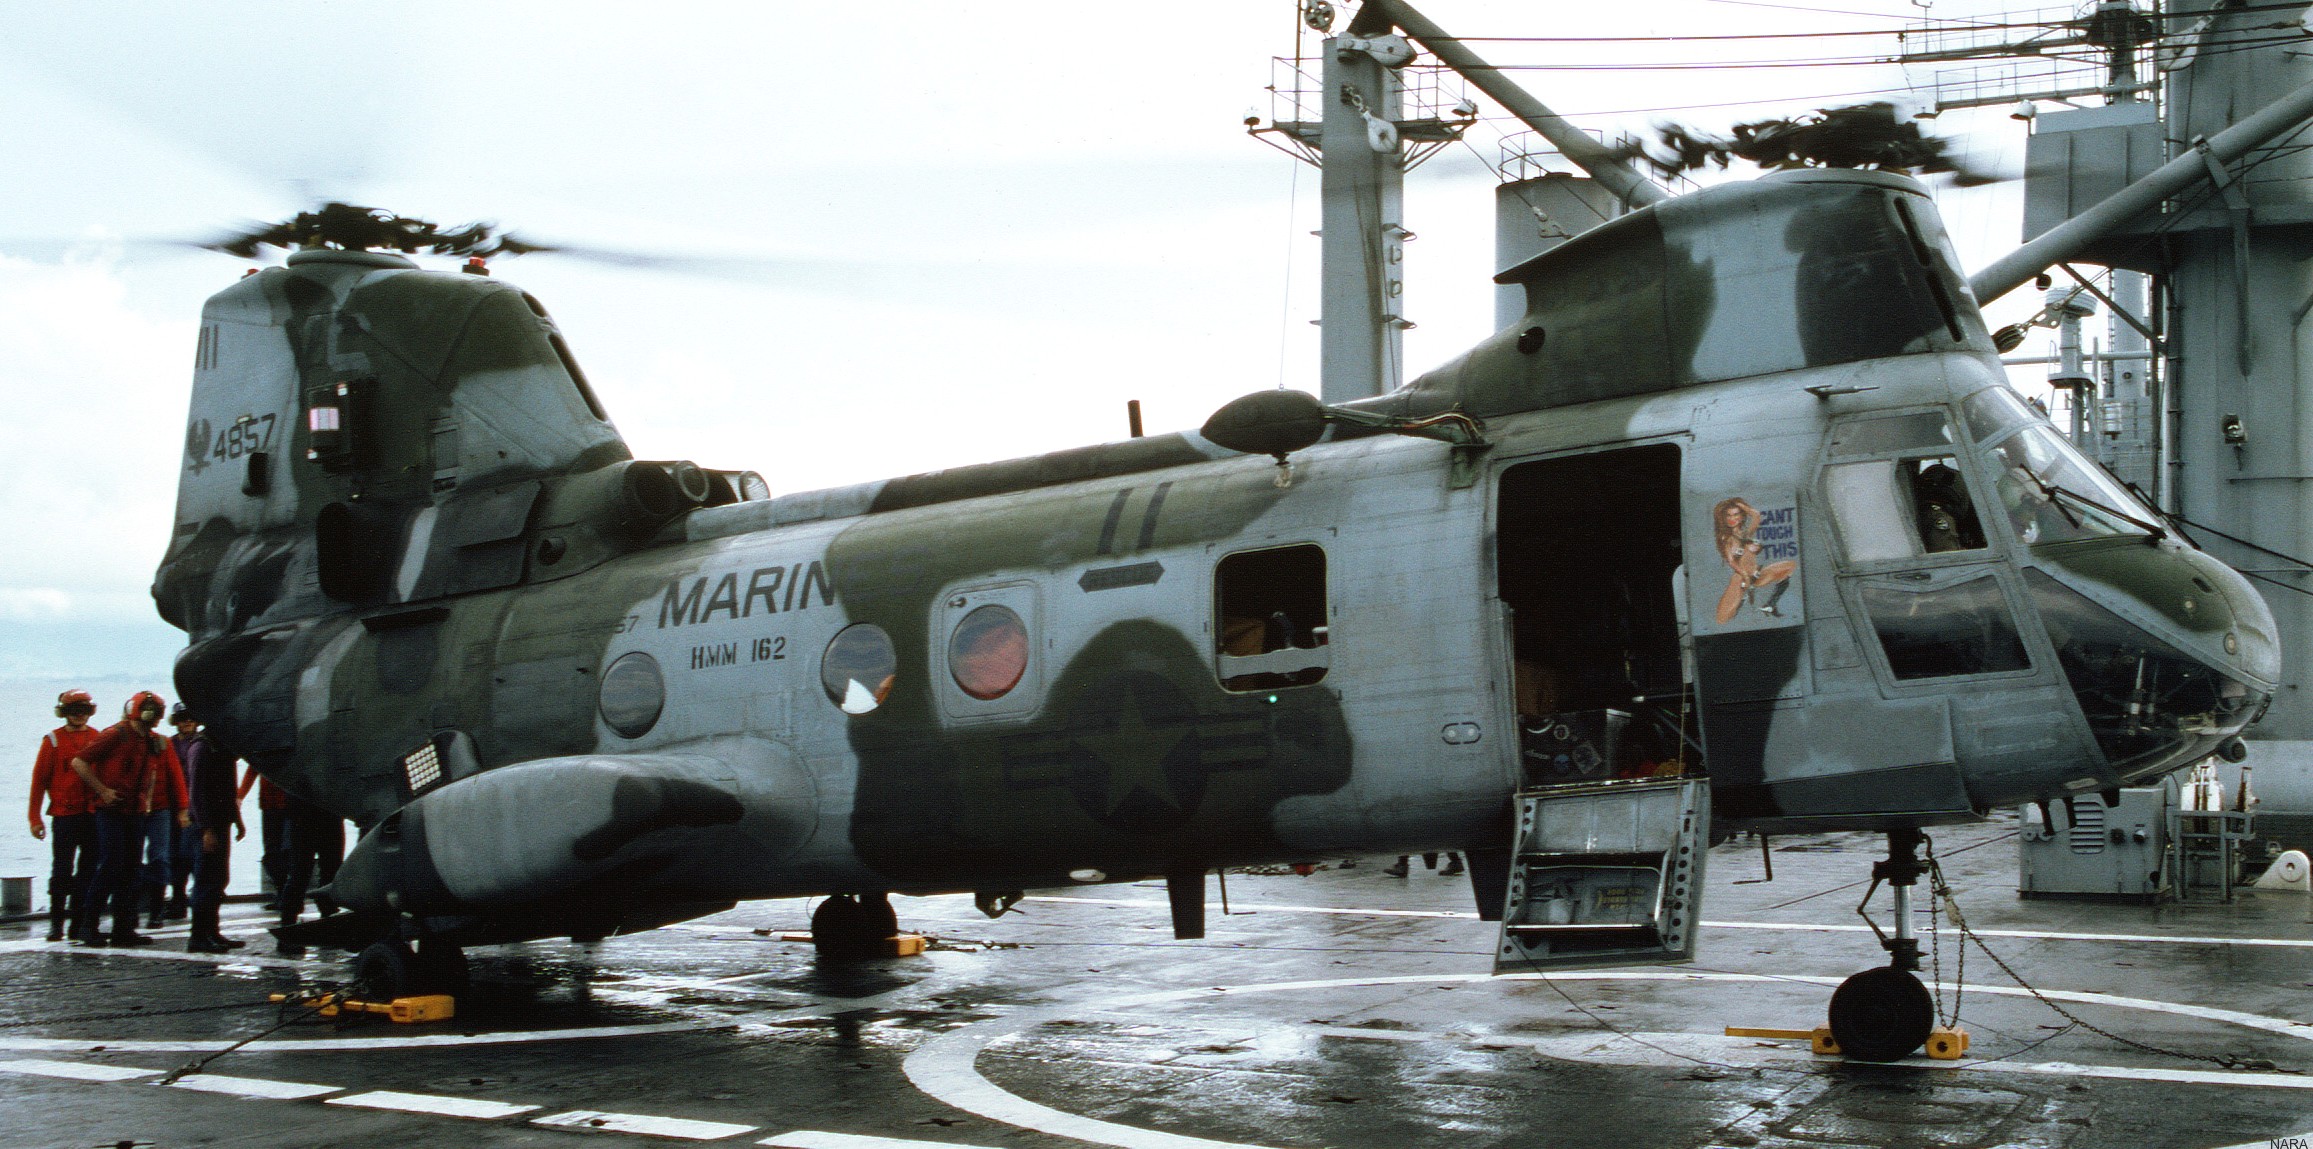 hmm-162 golden eagles marine medium helicopter squadron ch-46e sea knight usmc 39 operation sharp edge liberia 1990